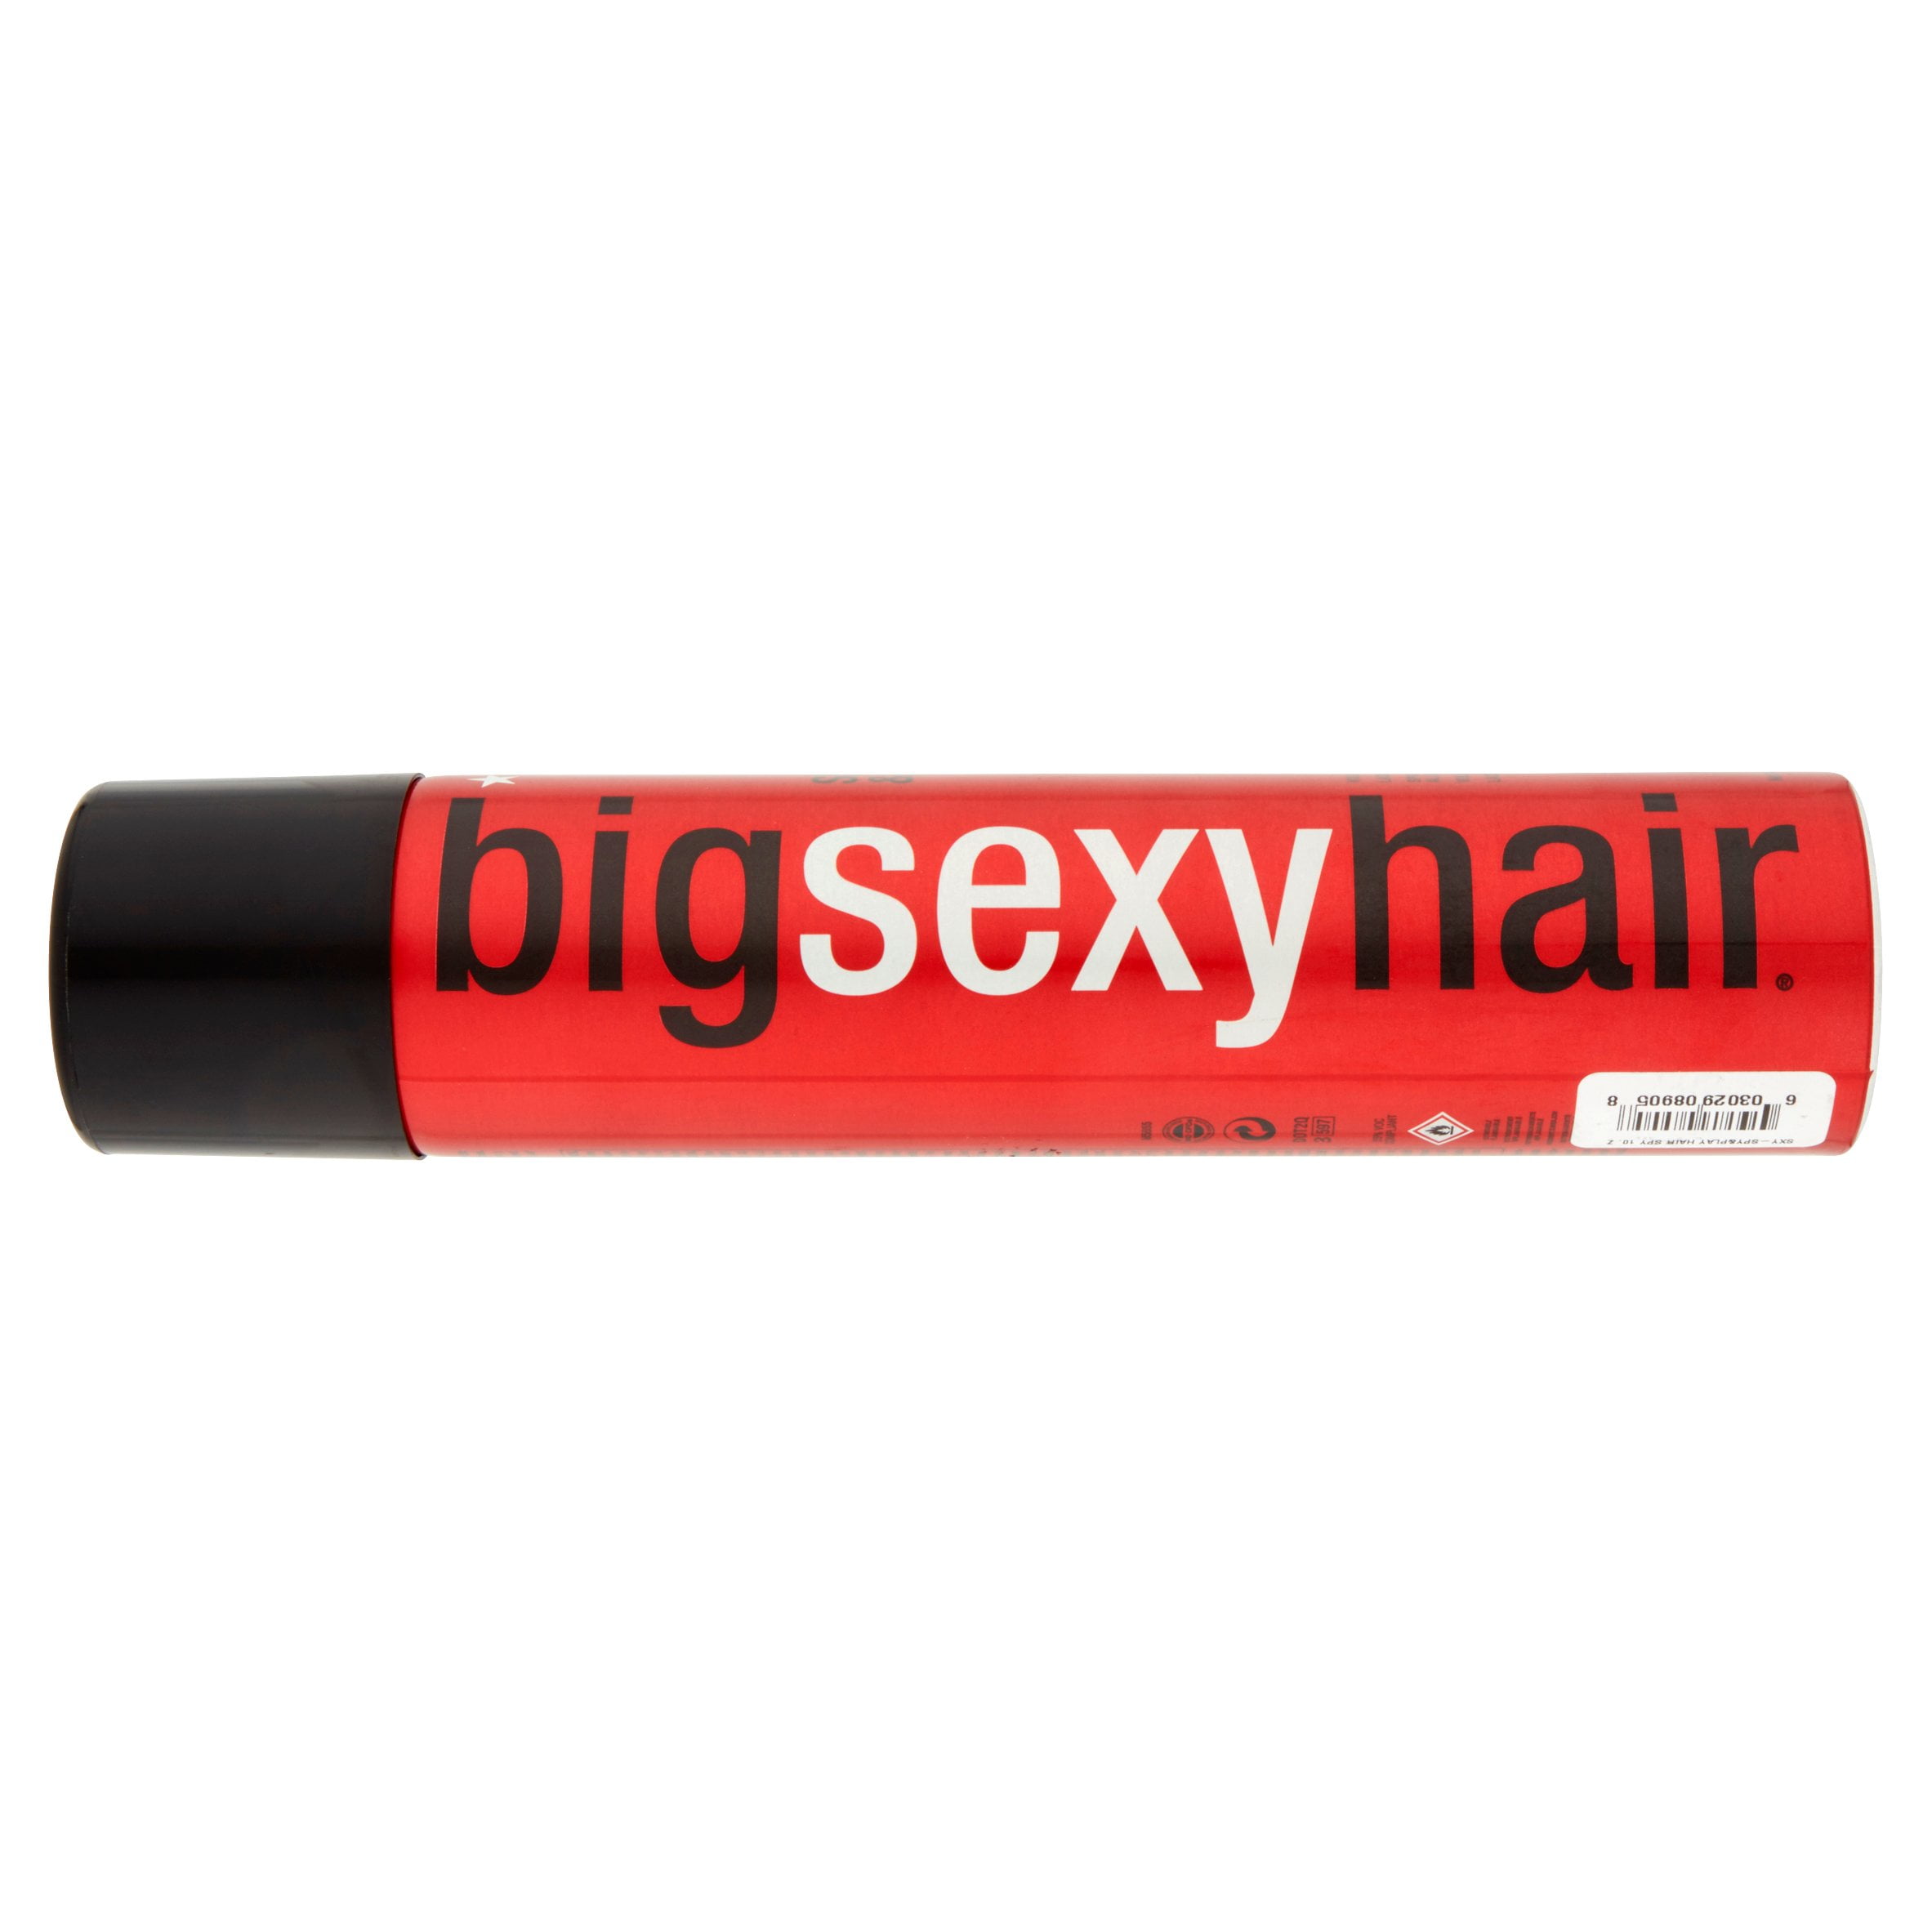 Sexy Hair Big Sexy Hair Spray and Stay Intense Hold Hairspray 9 oz, 9 oz -  Harris Teeter